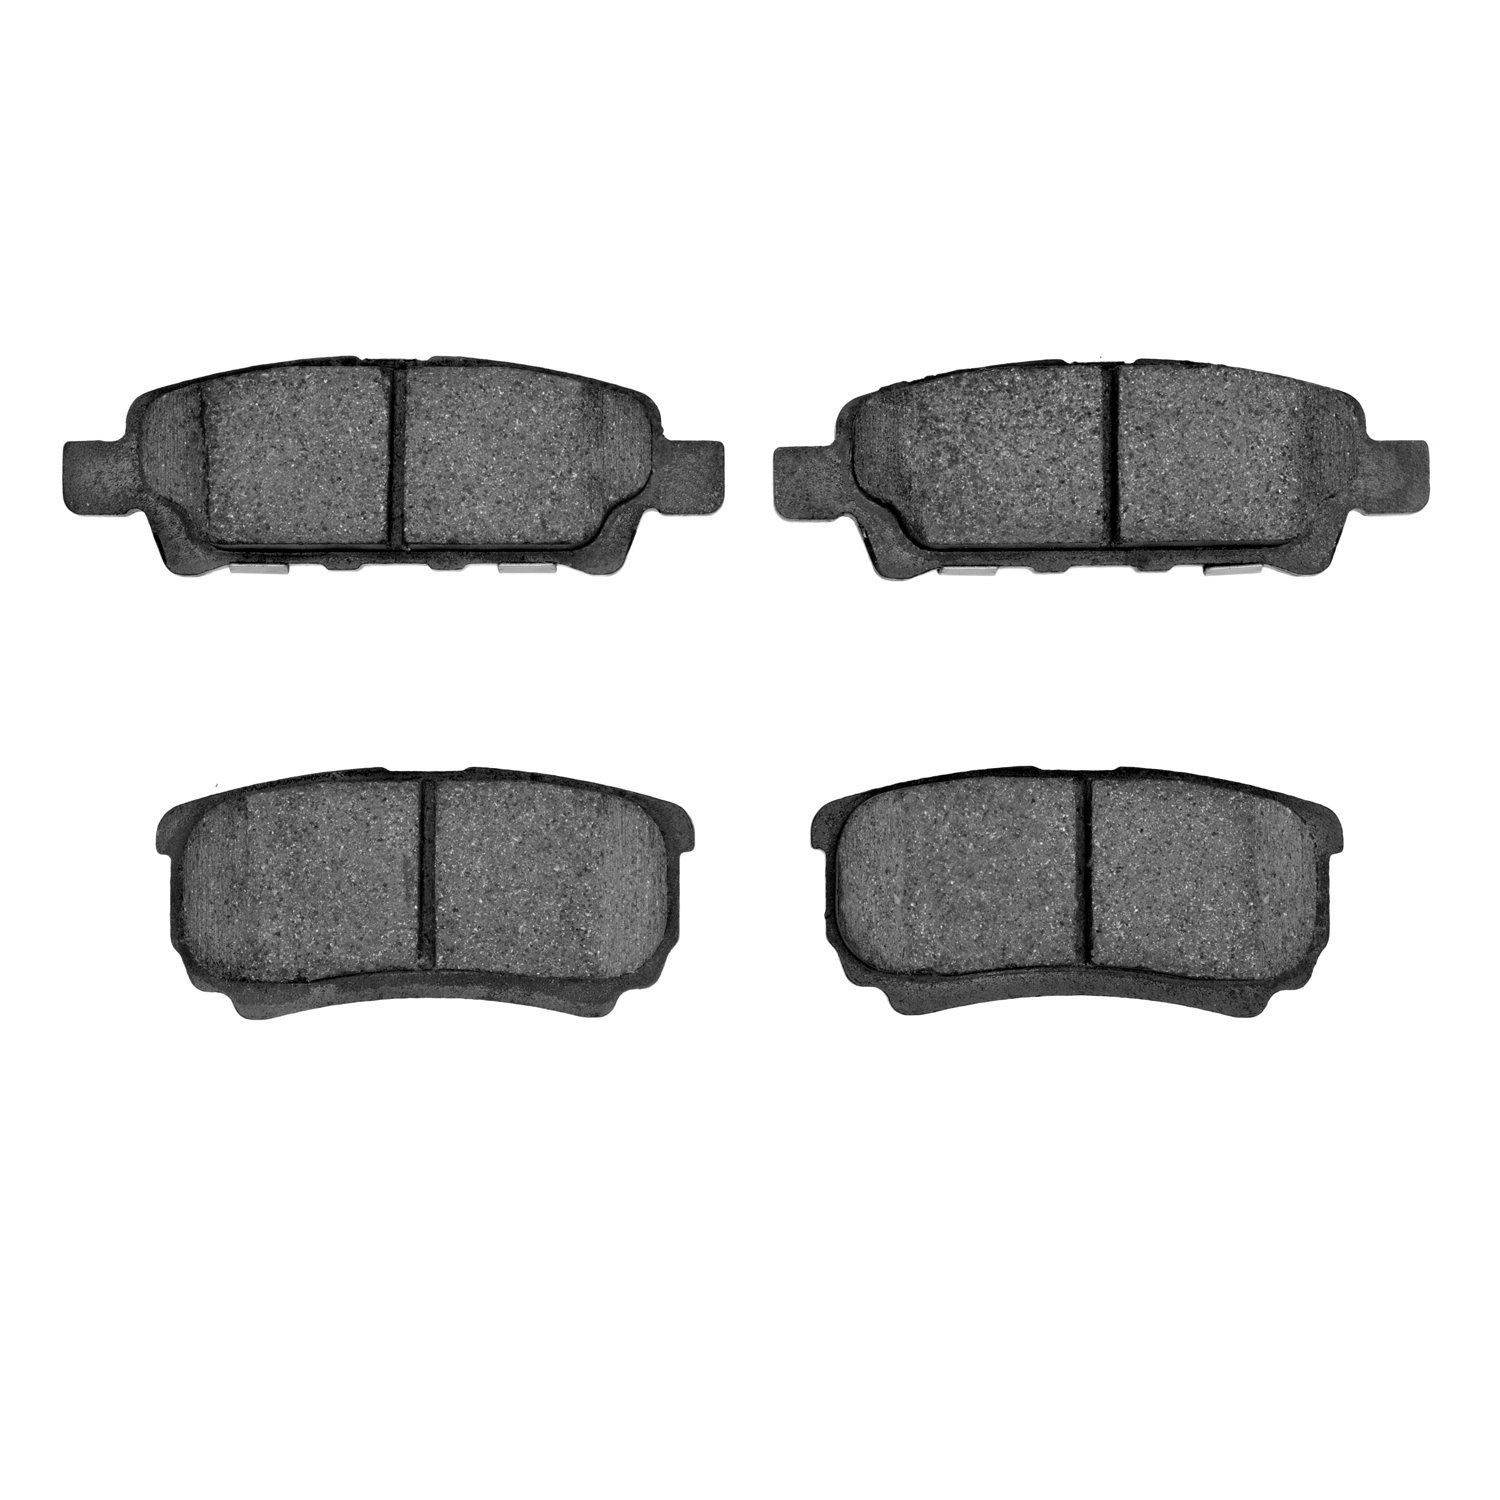 Ceramic Brake Pads, 2004-2017 Fits Multiple Makes/Models, Position: Rear